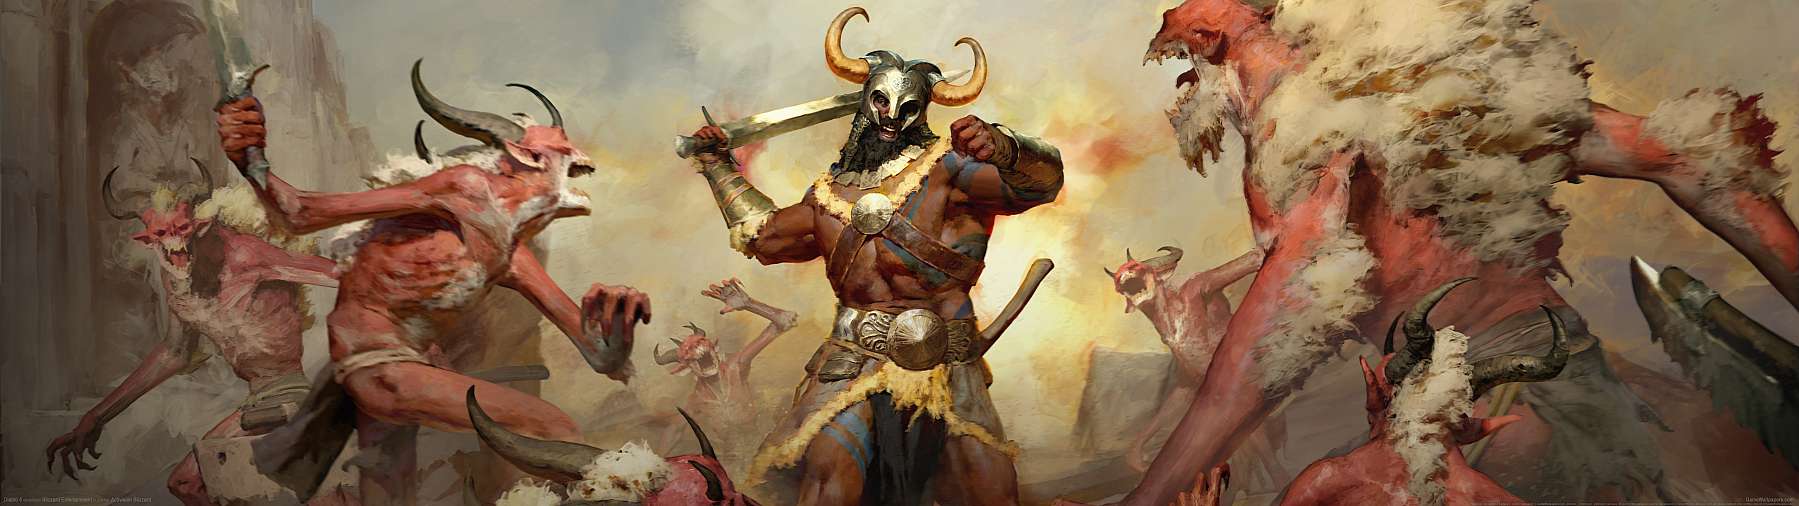 Diablo 4 wallpaper or background